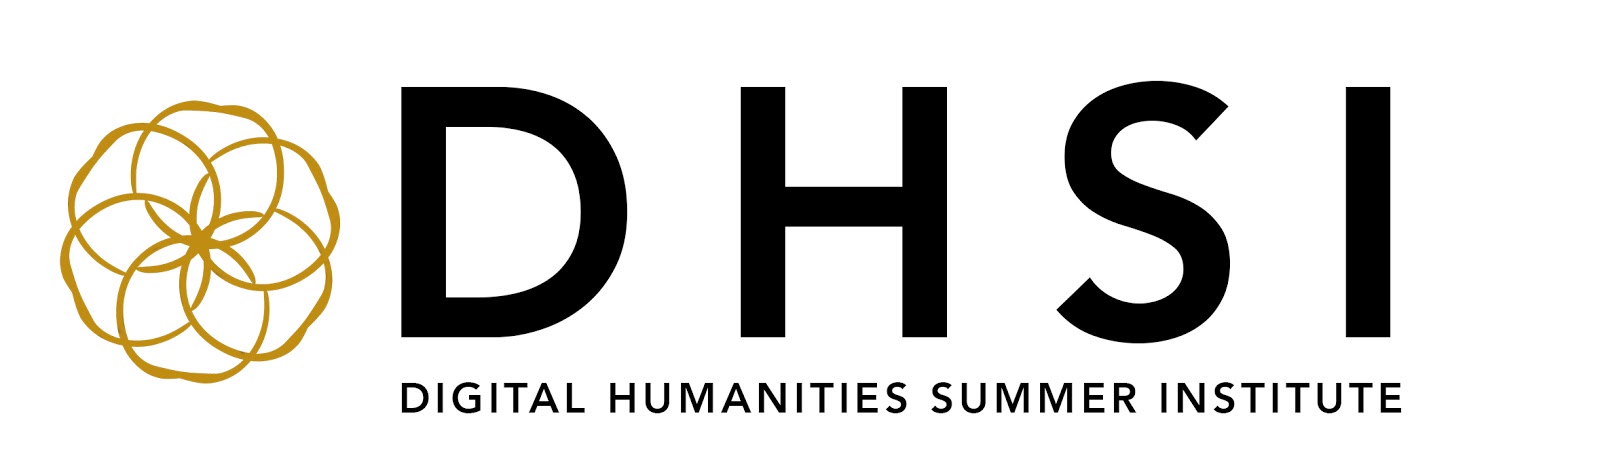 Digital Humanities Summer Institute